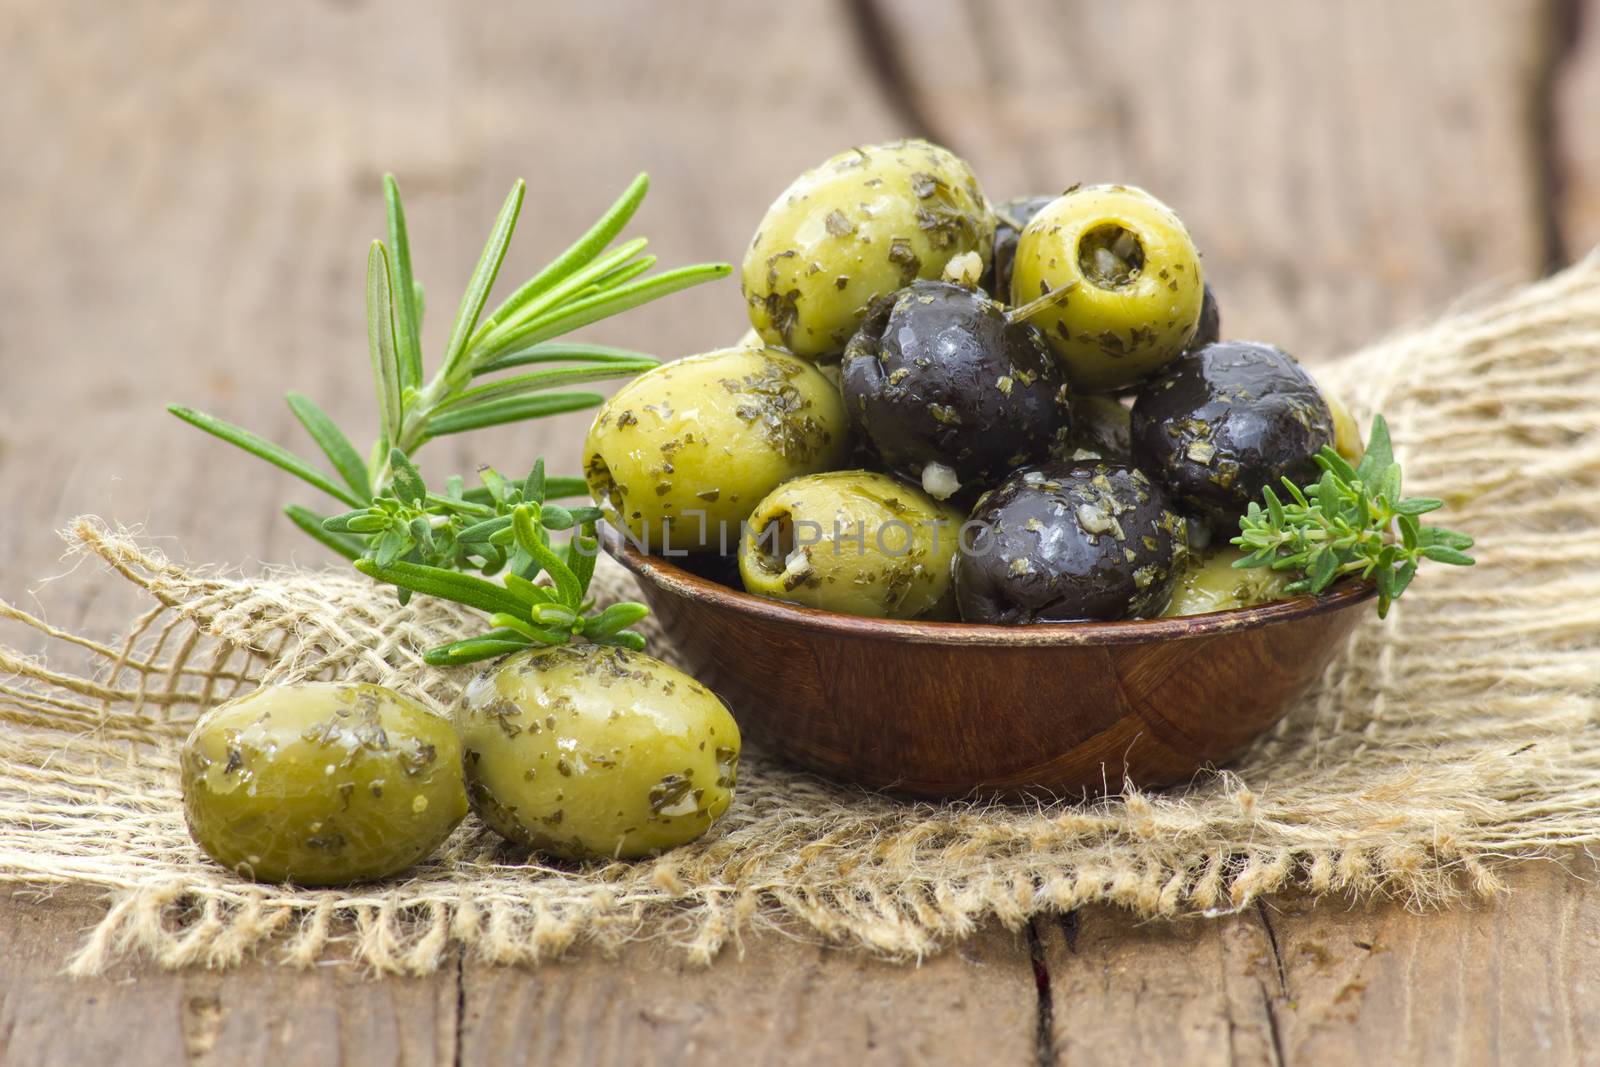 black and green olives by miradrozdowski